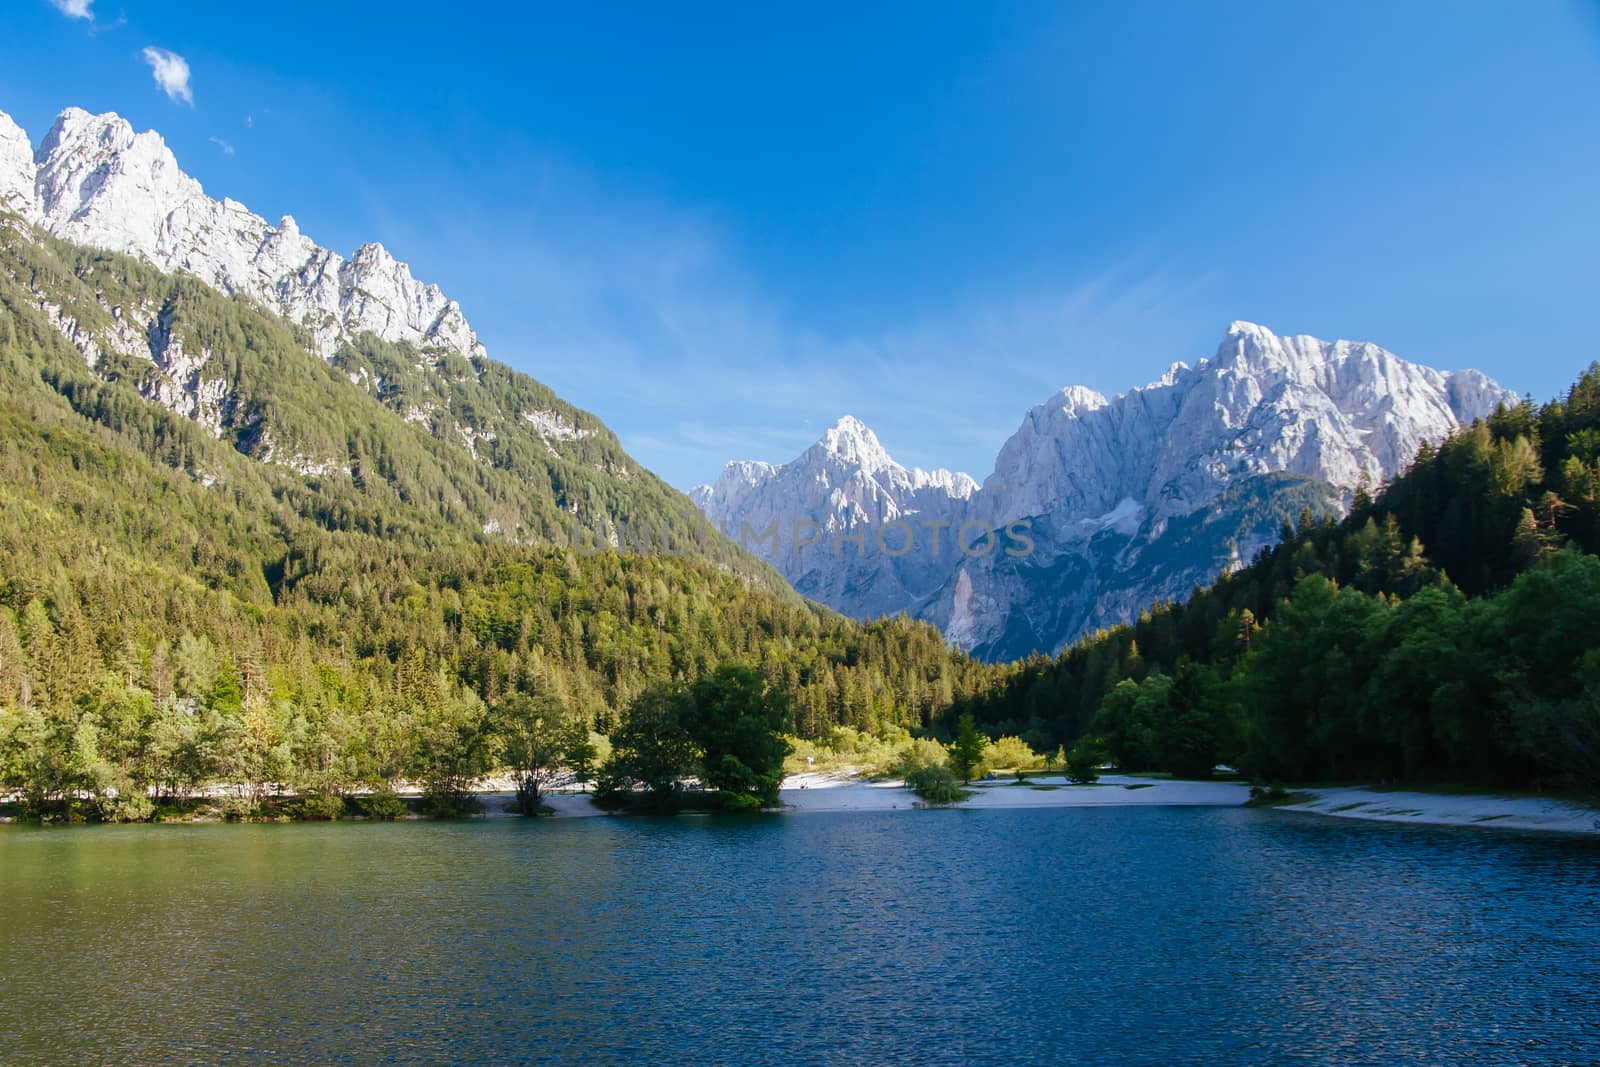 Stunning landscape scenery in Triglav National Park, the highest point in Slovenia